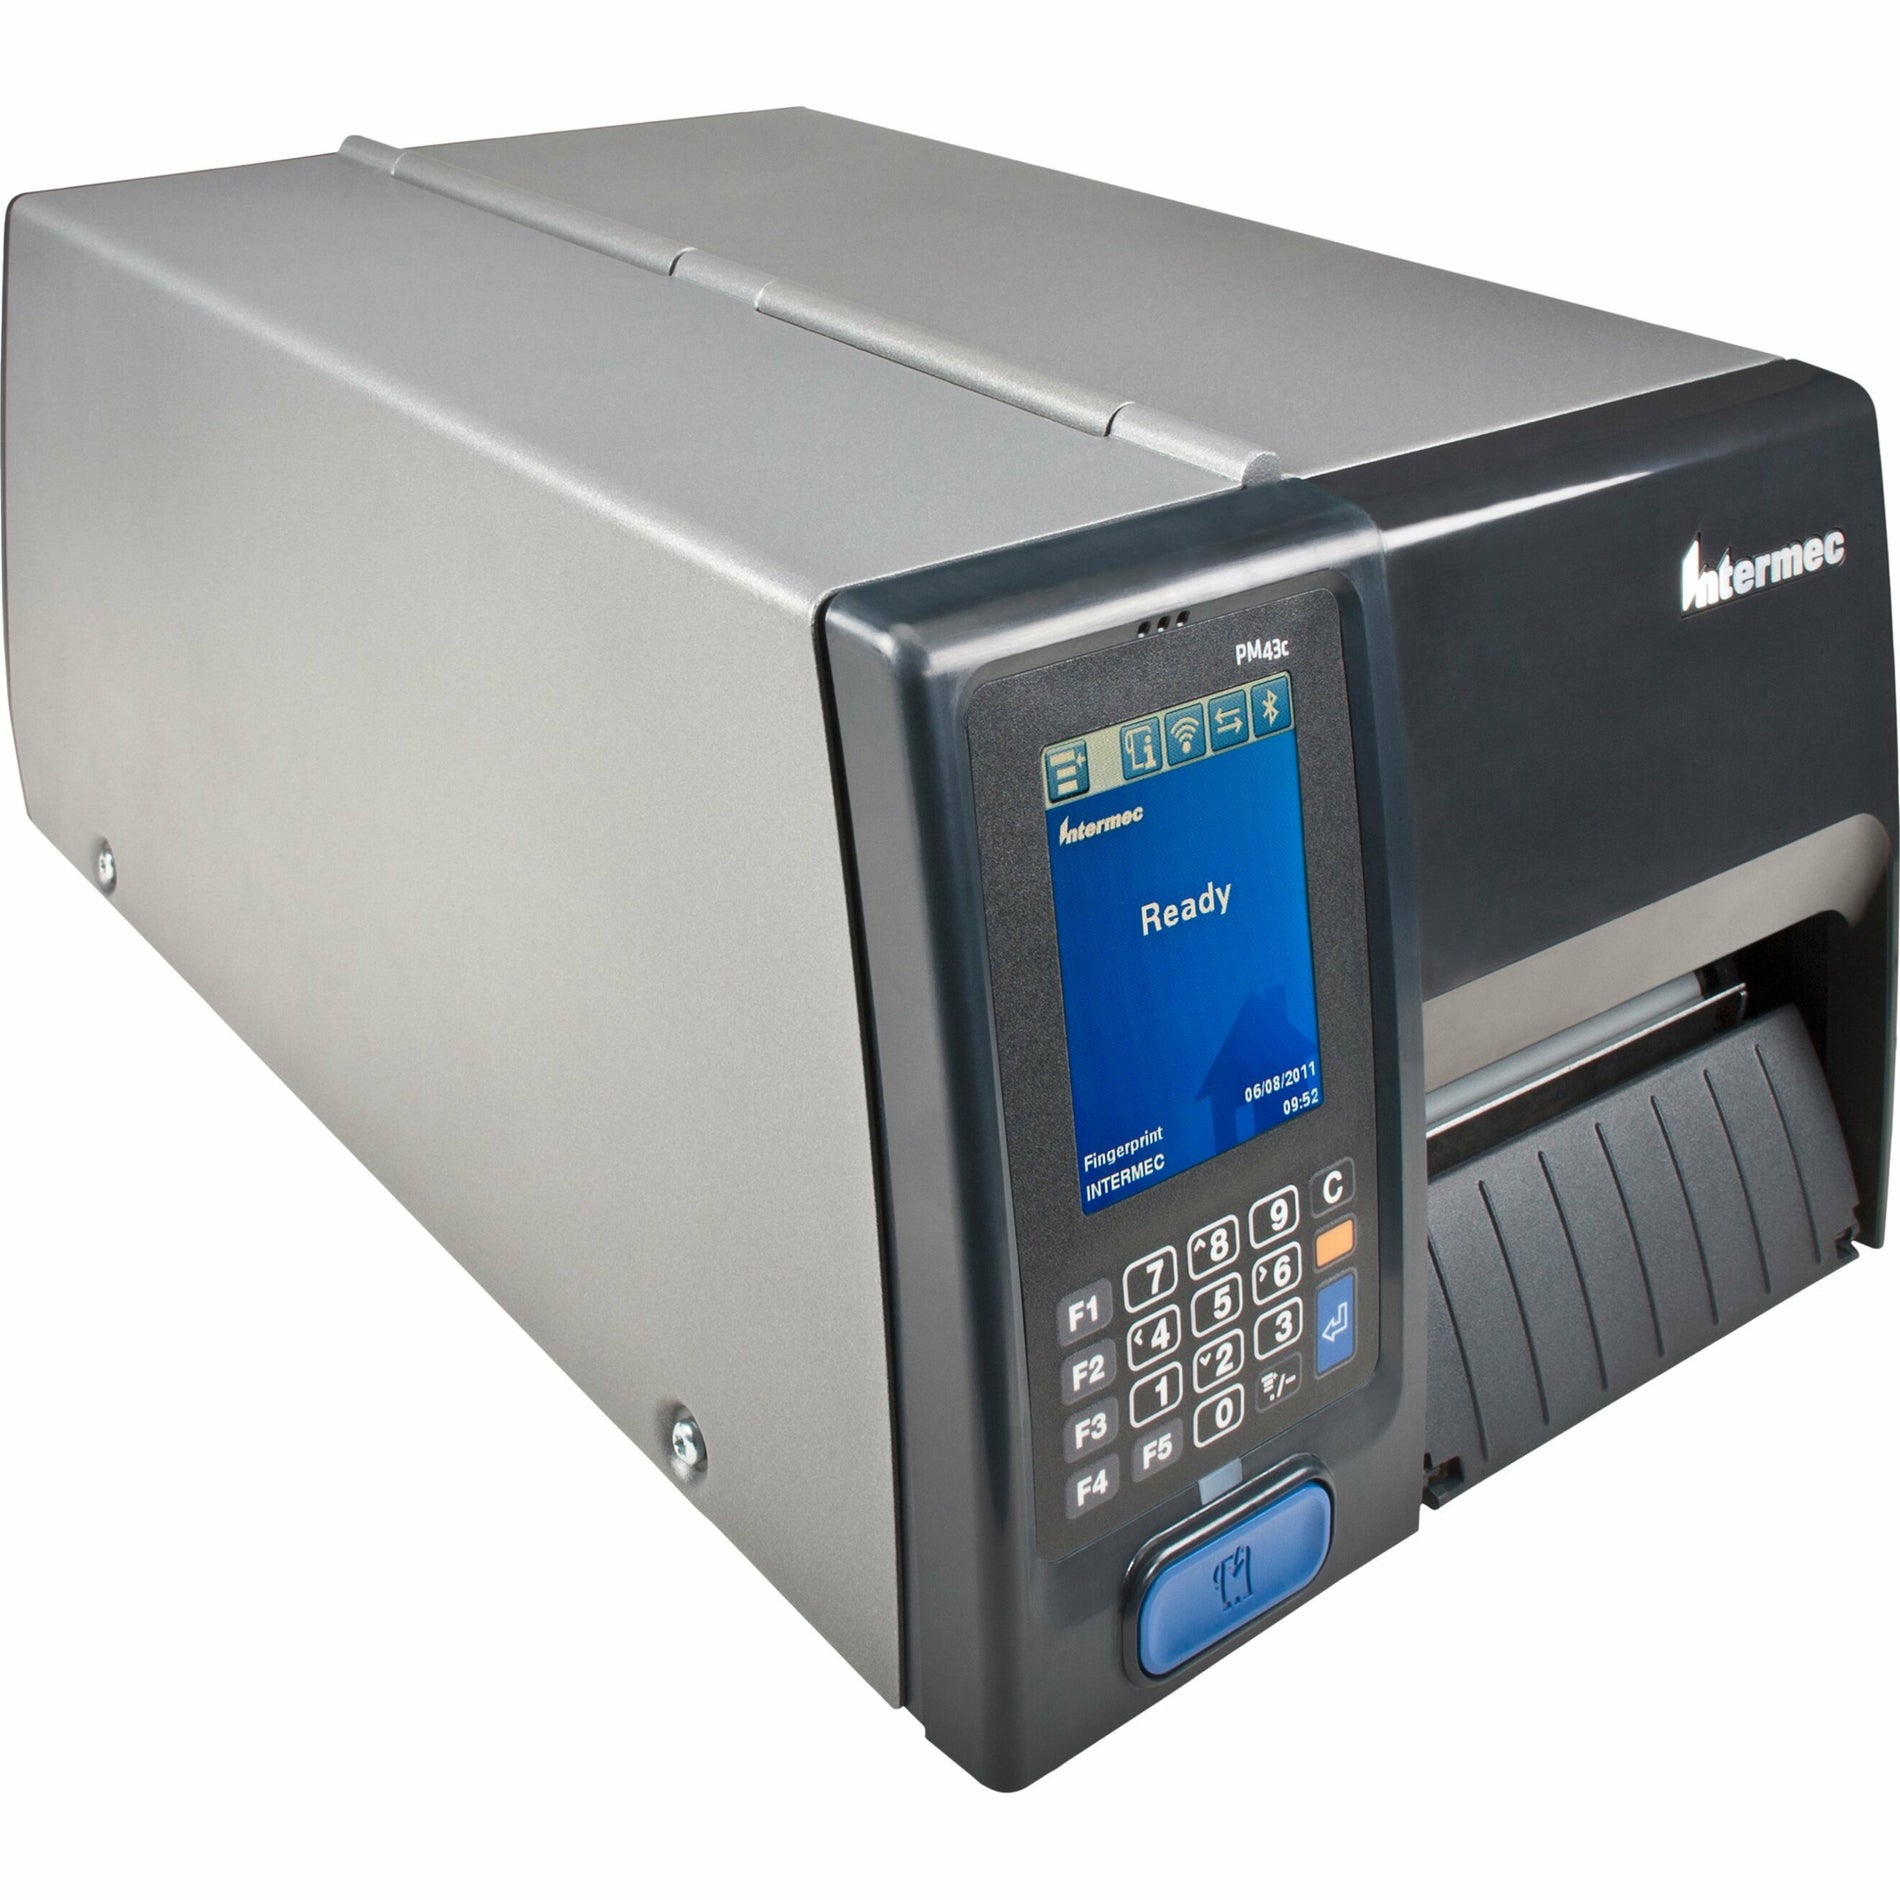 Intermec PM43A11000000301 PM43 Mid-Range Printer, Direct Thermal/Thermal Transfer Printer, 300DPI, Ethernet, Full Touch, Energy Star